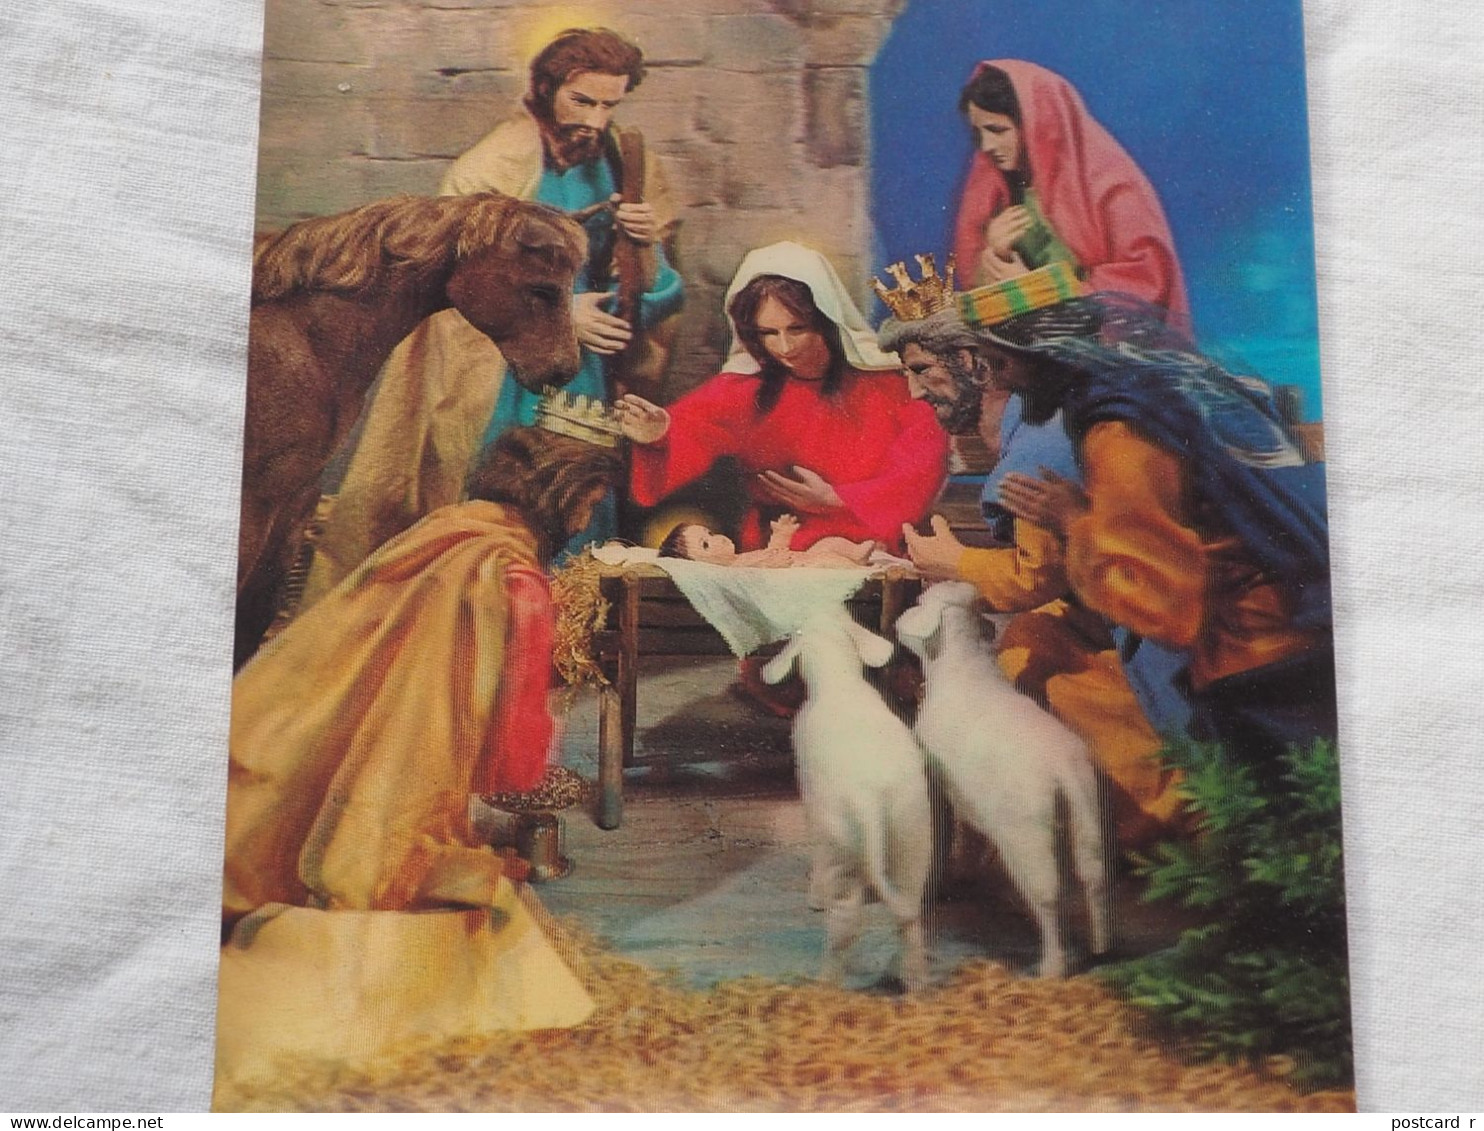 3d 3 D Lenticular Postcard Stereo Religion Nativity    Japan  1980 A 227 - Stereoscope Cards